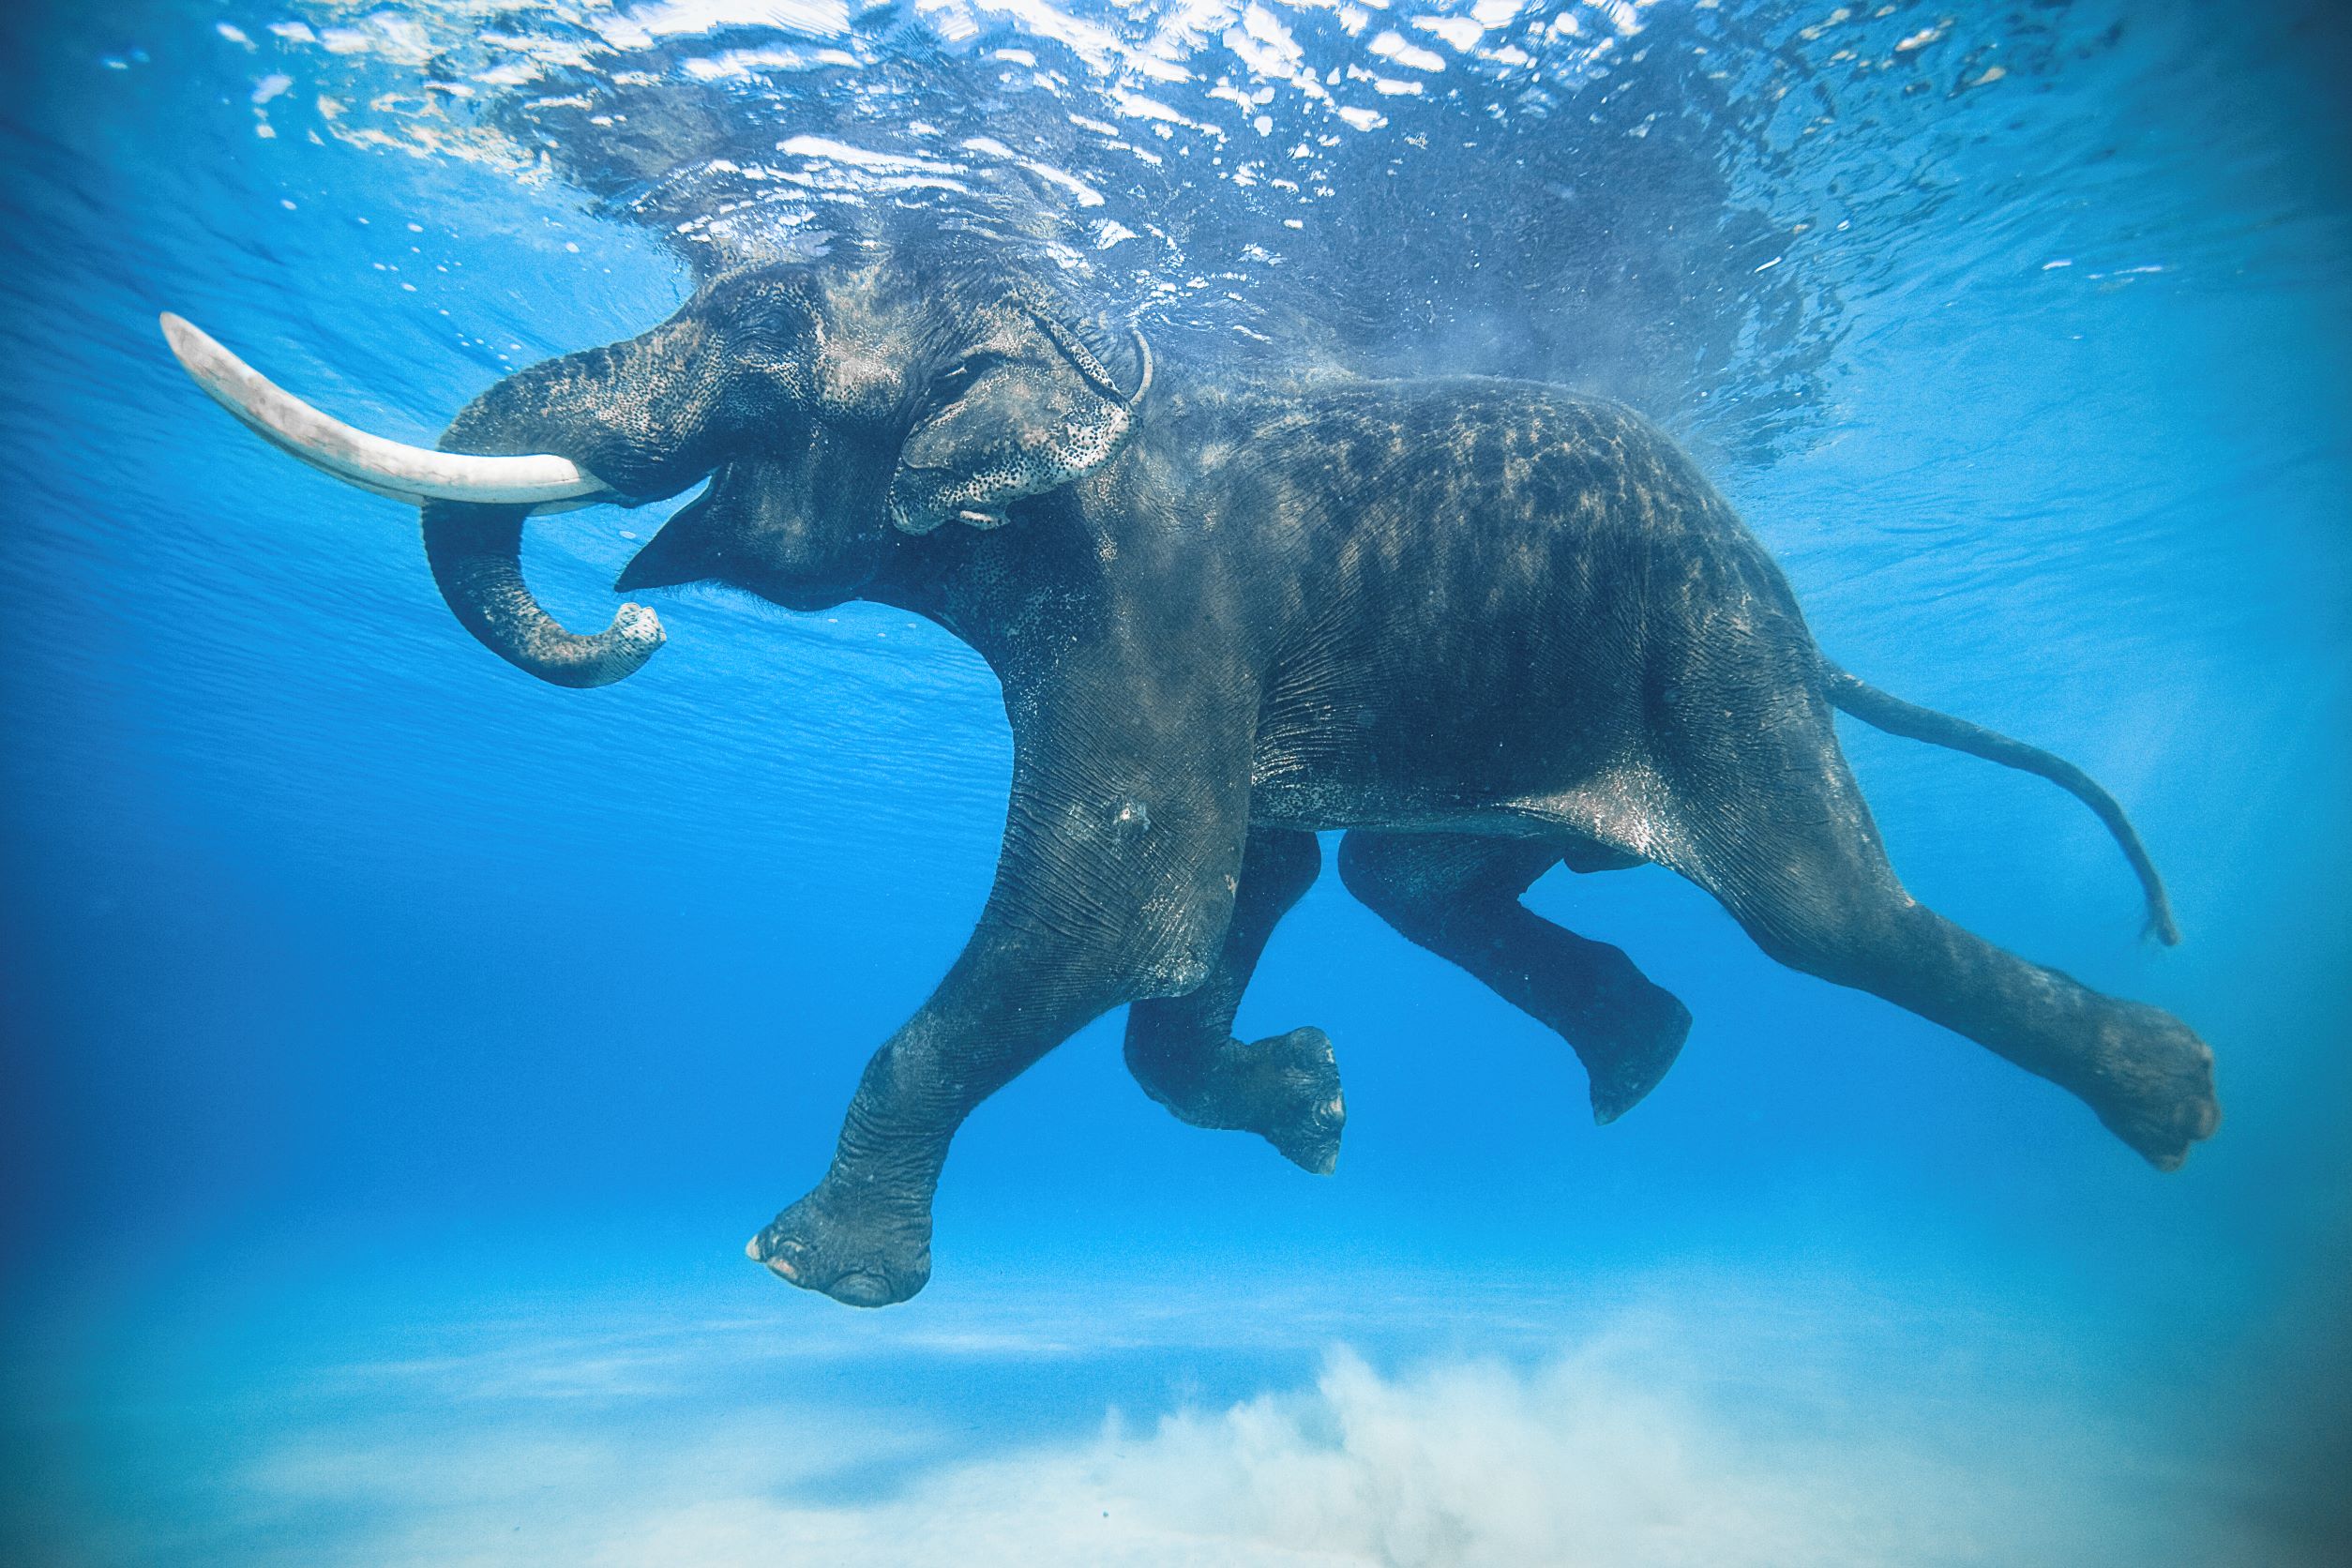 Rajan the elephant swimming in the ocean